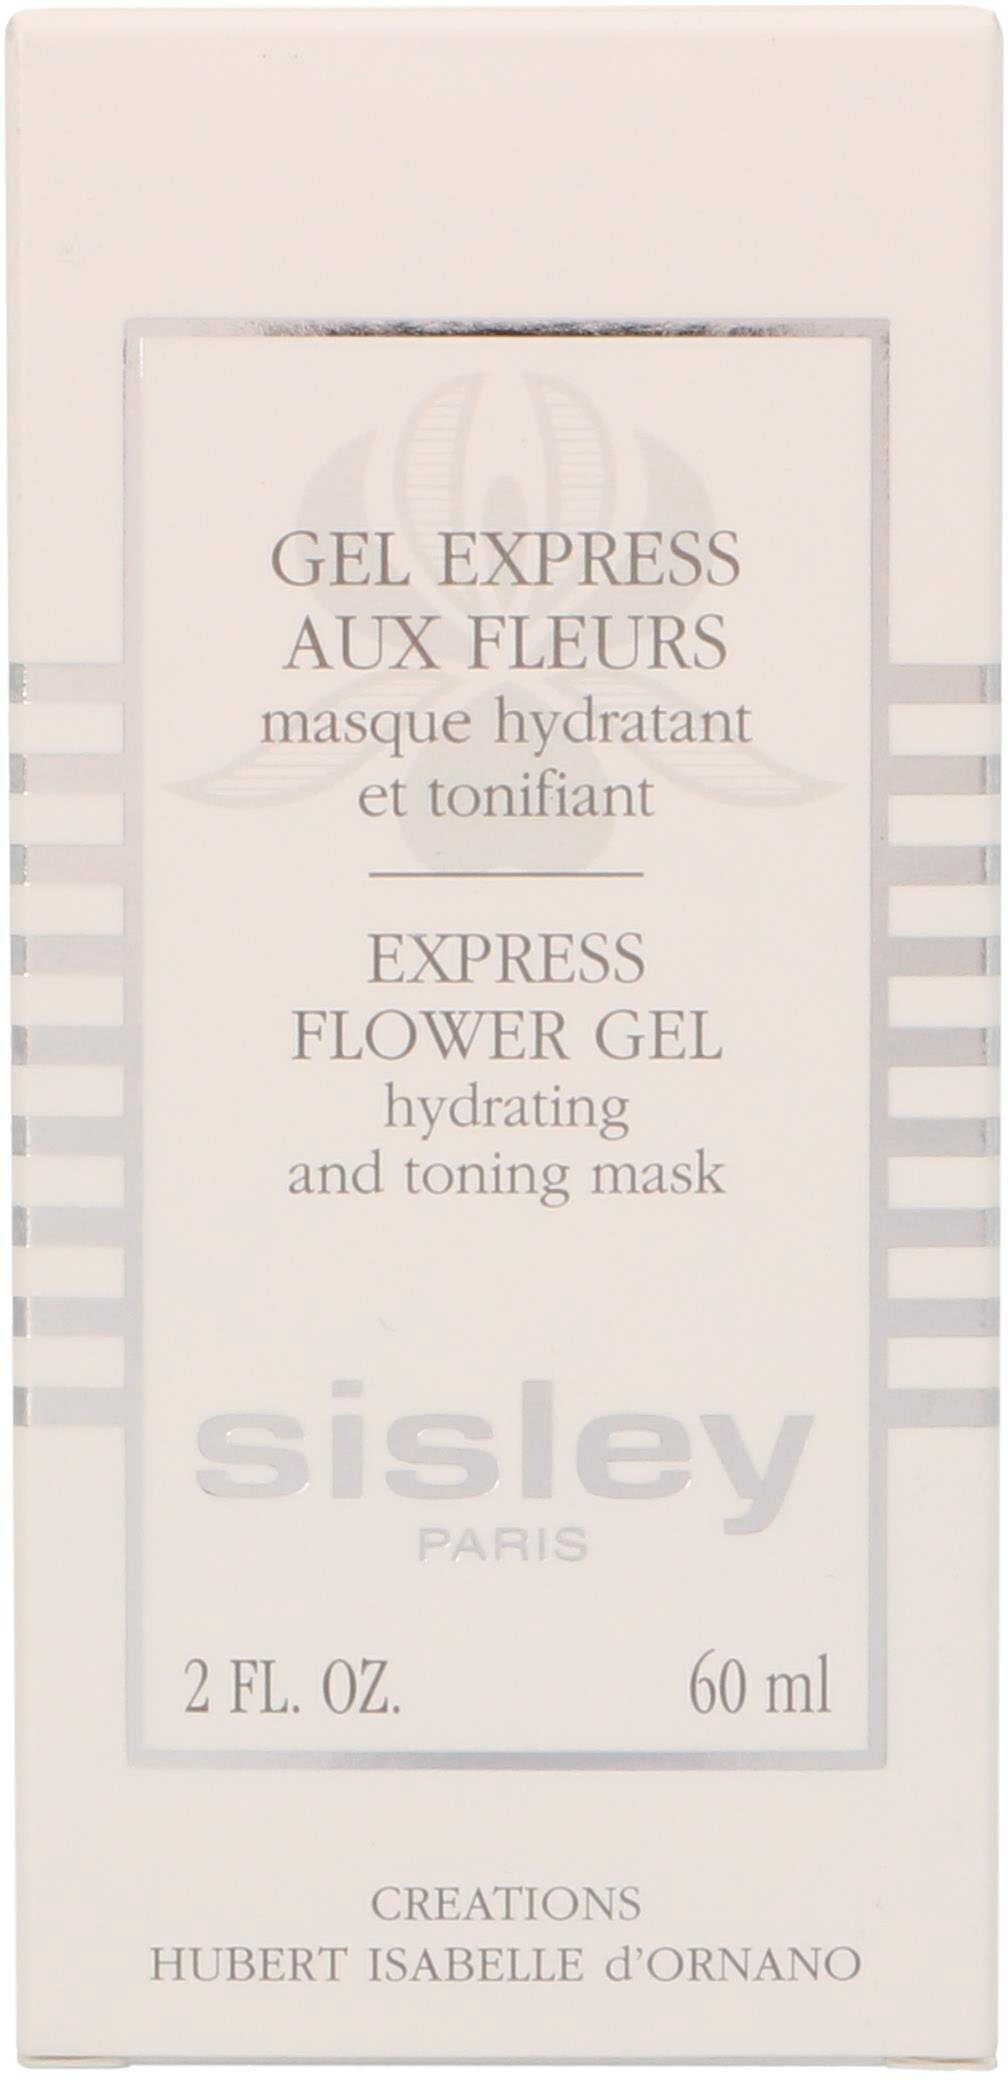 Gel Flower Express sisley Gesichtsgel